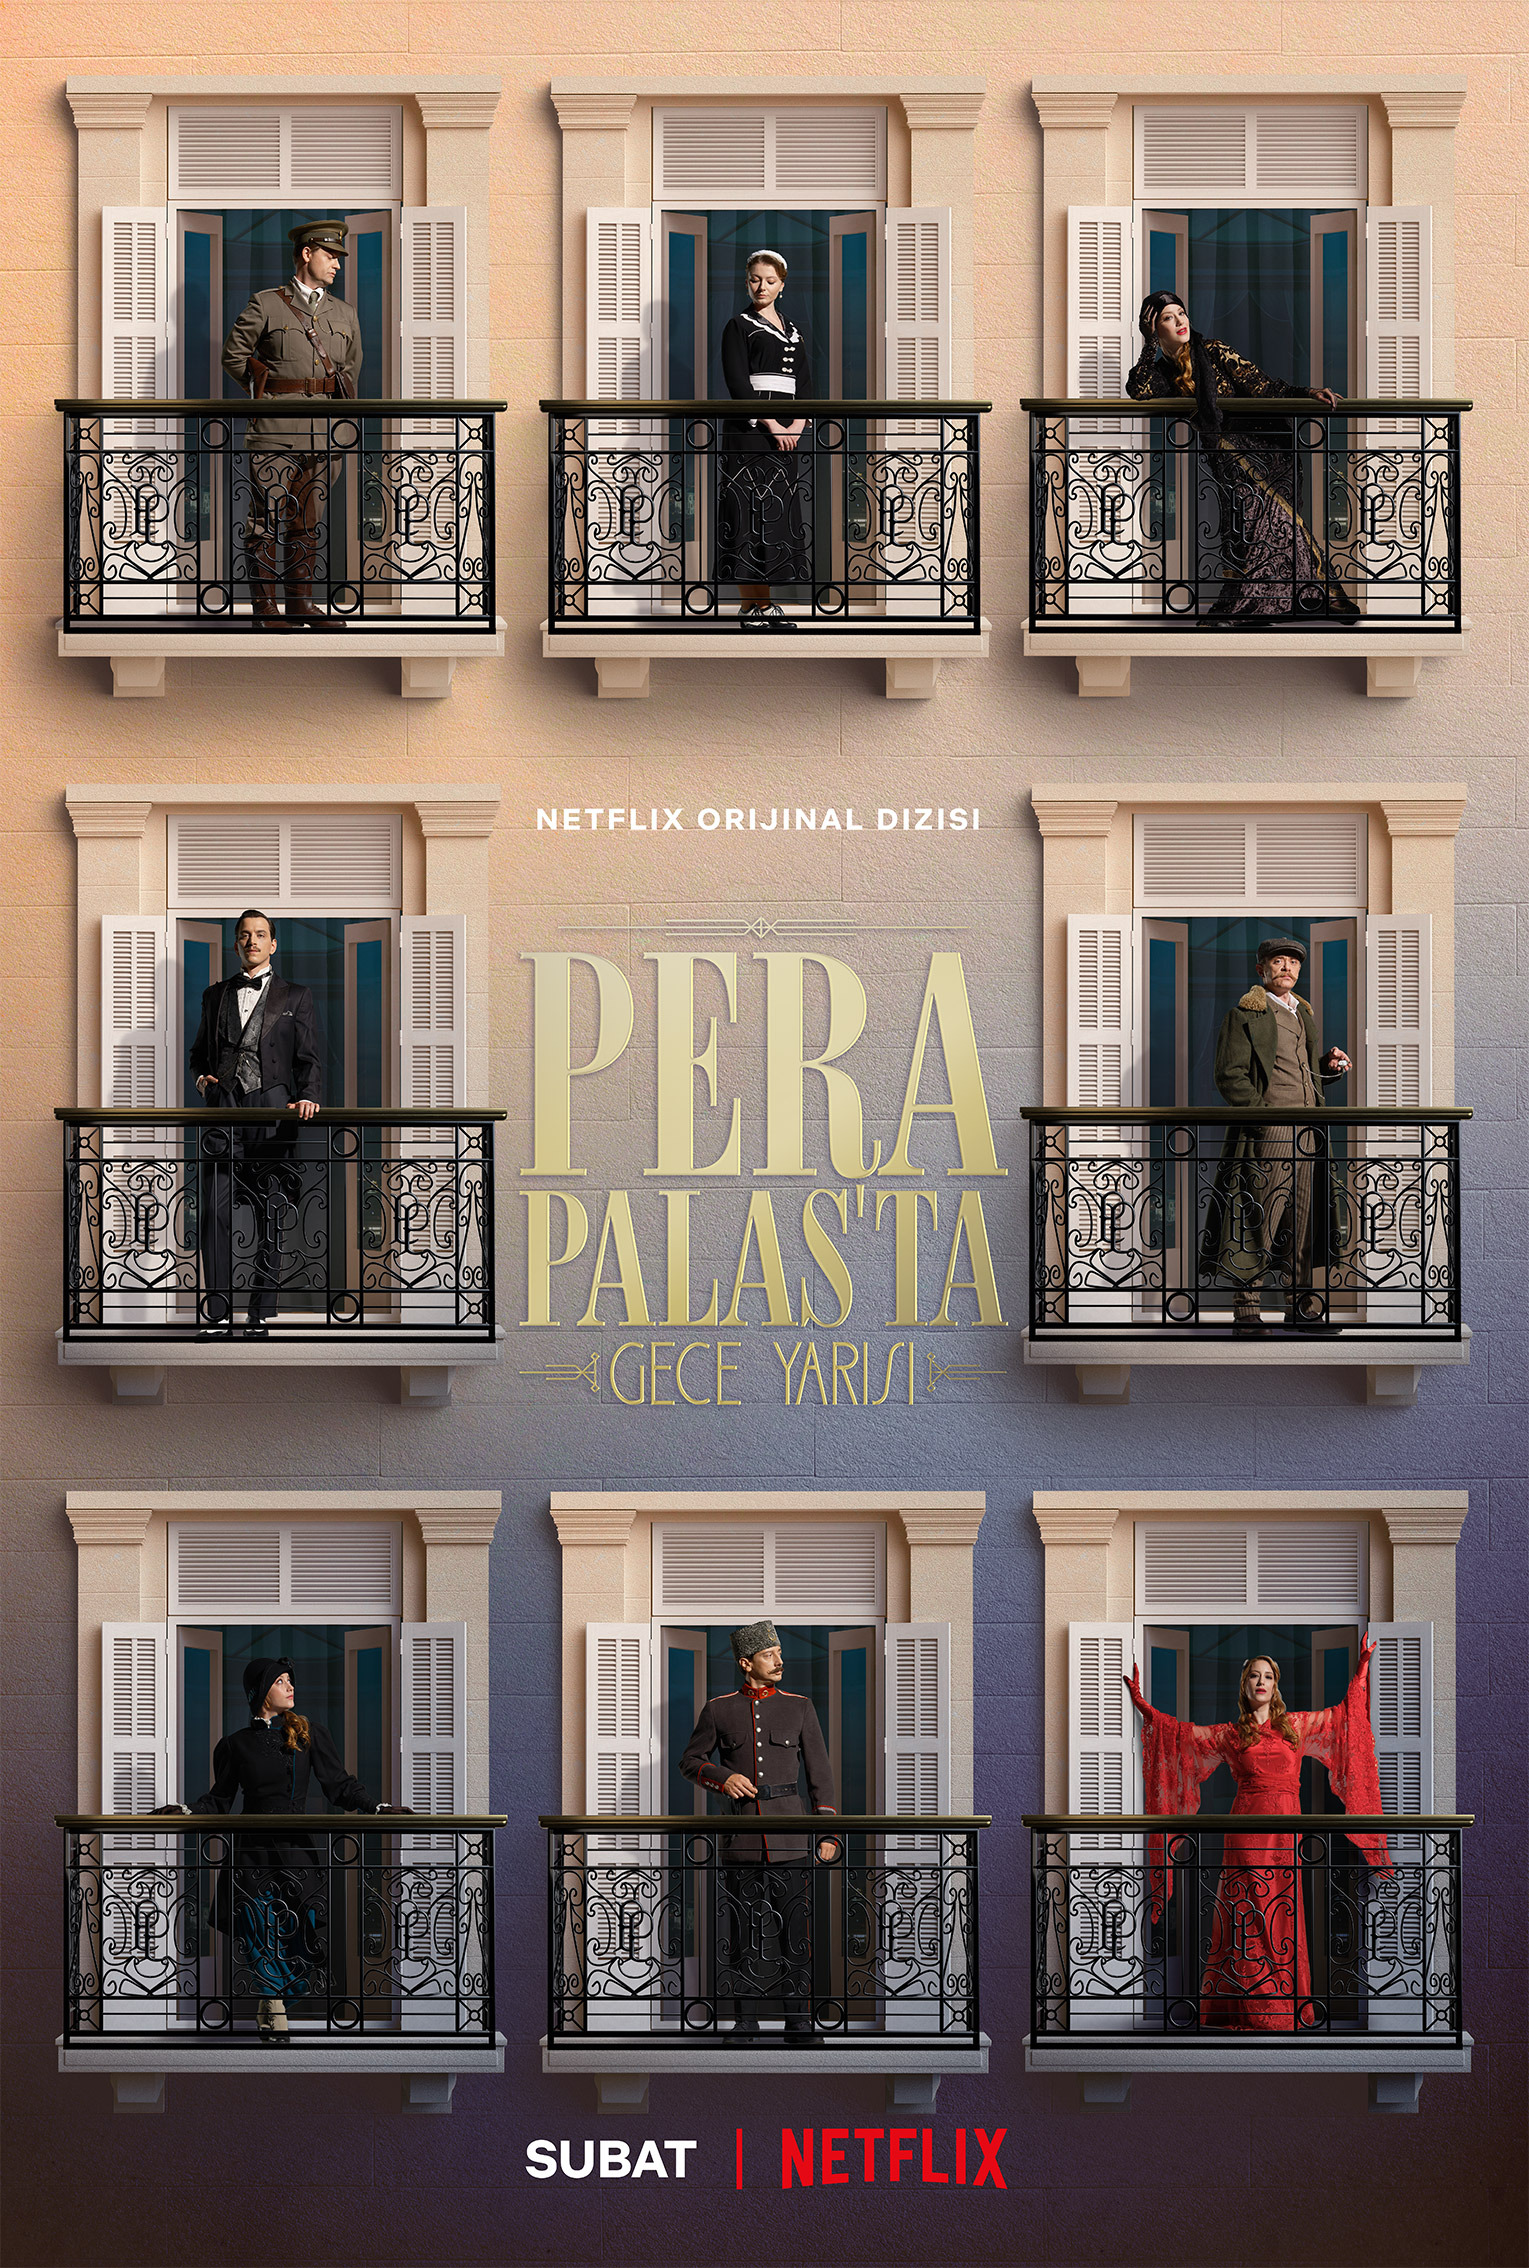 Mega Sized TV Poster Image for Pera Palas'ta Gece Yarisi (#1 of 10)